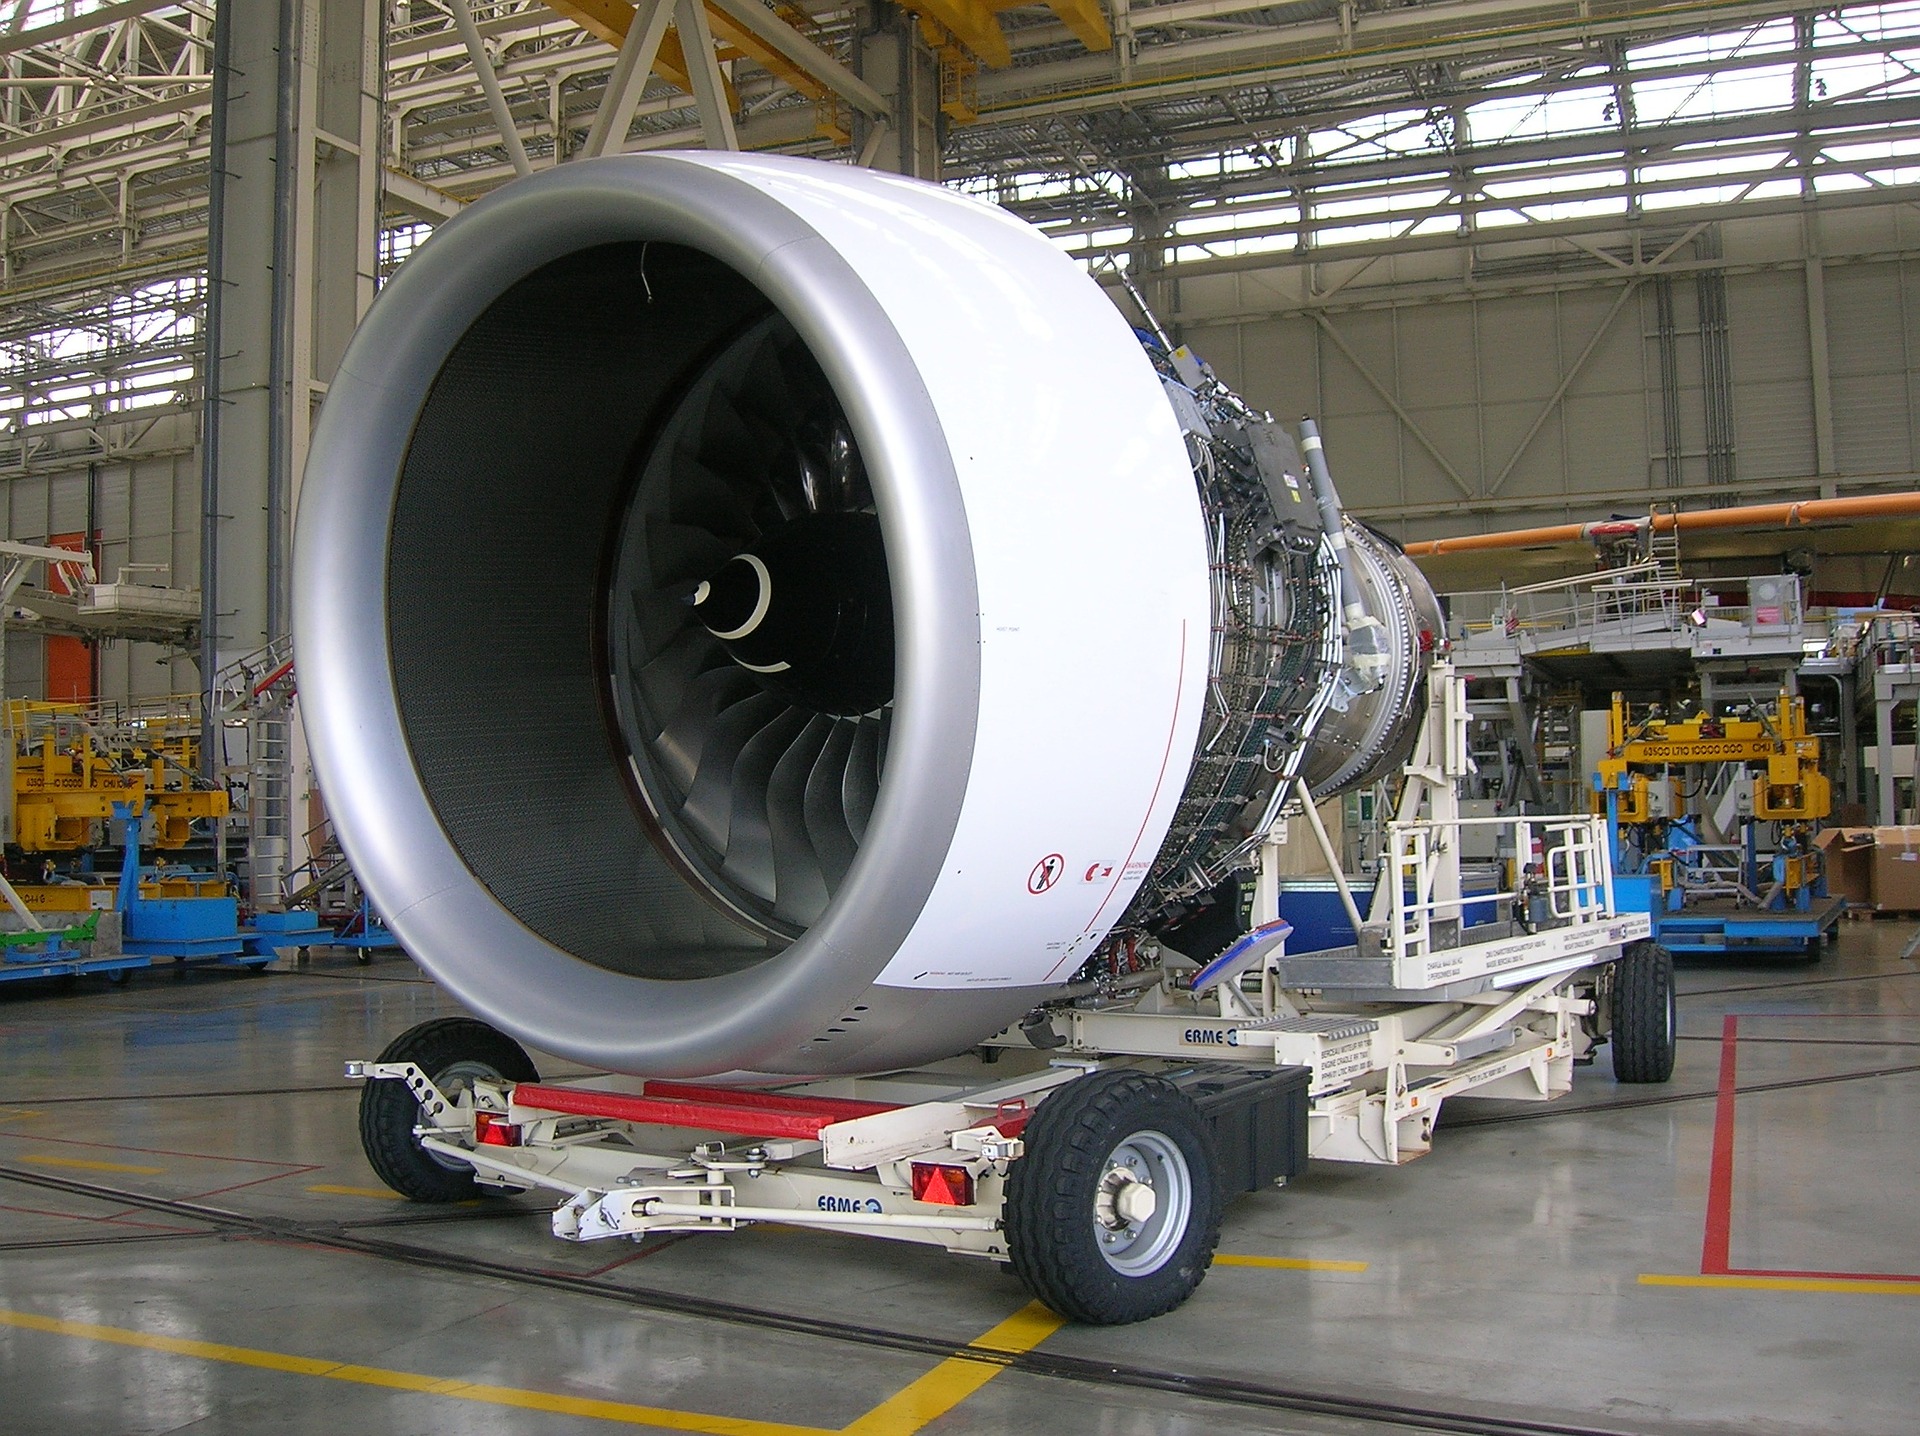 A Rolls-Royce Trent900 Jet Engine